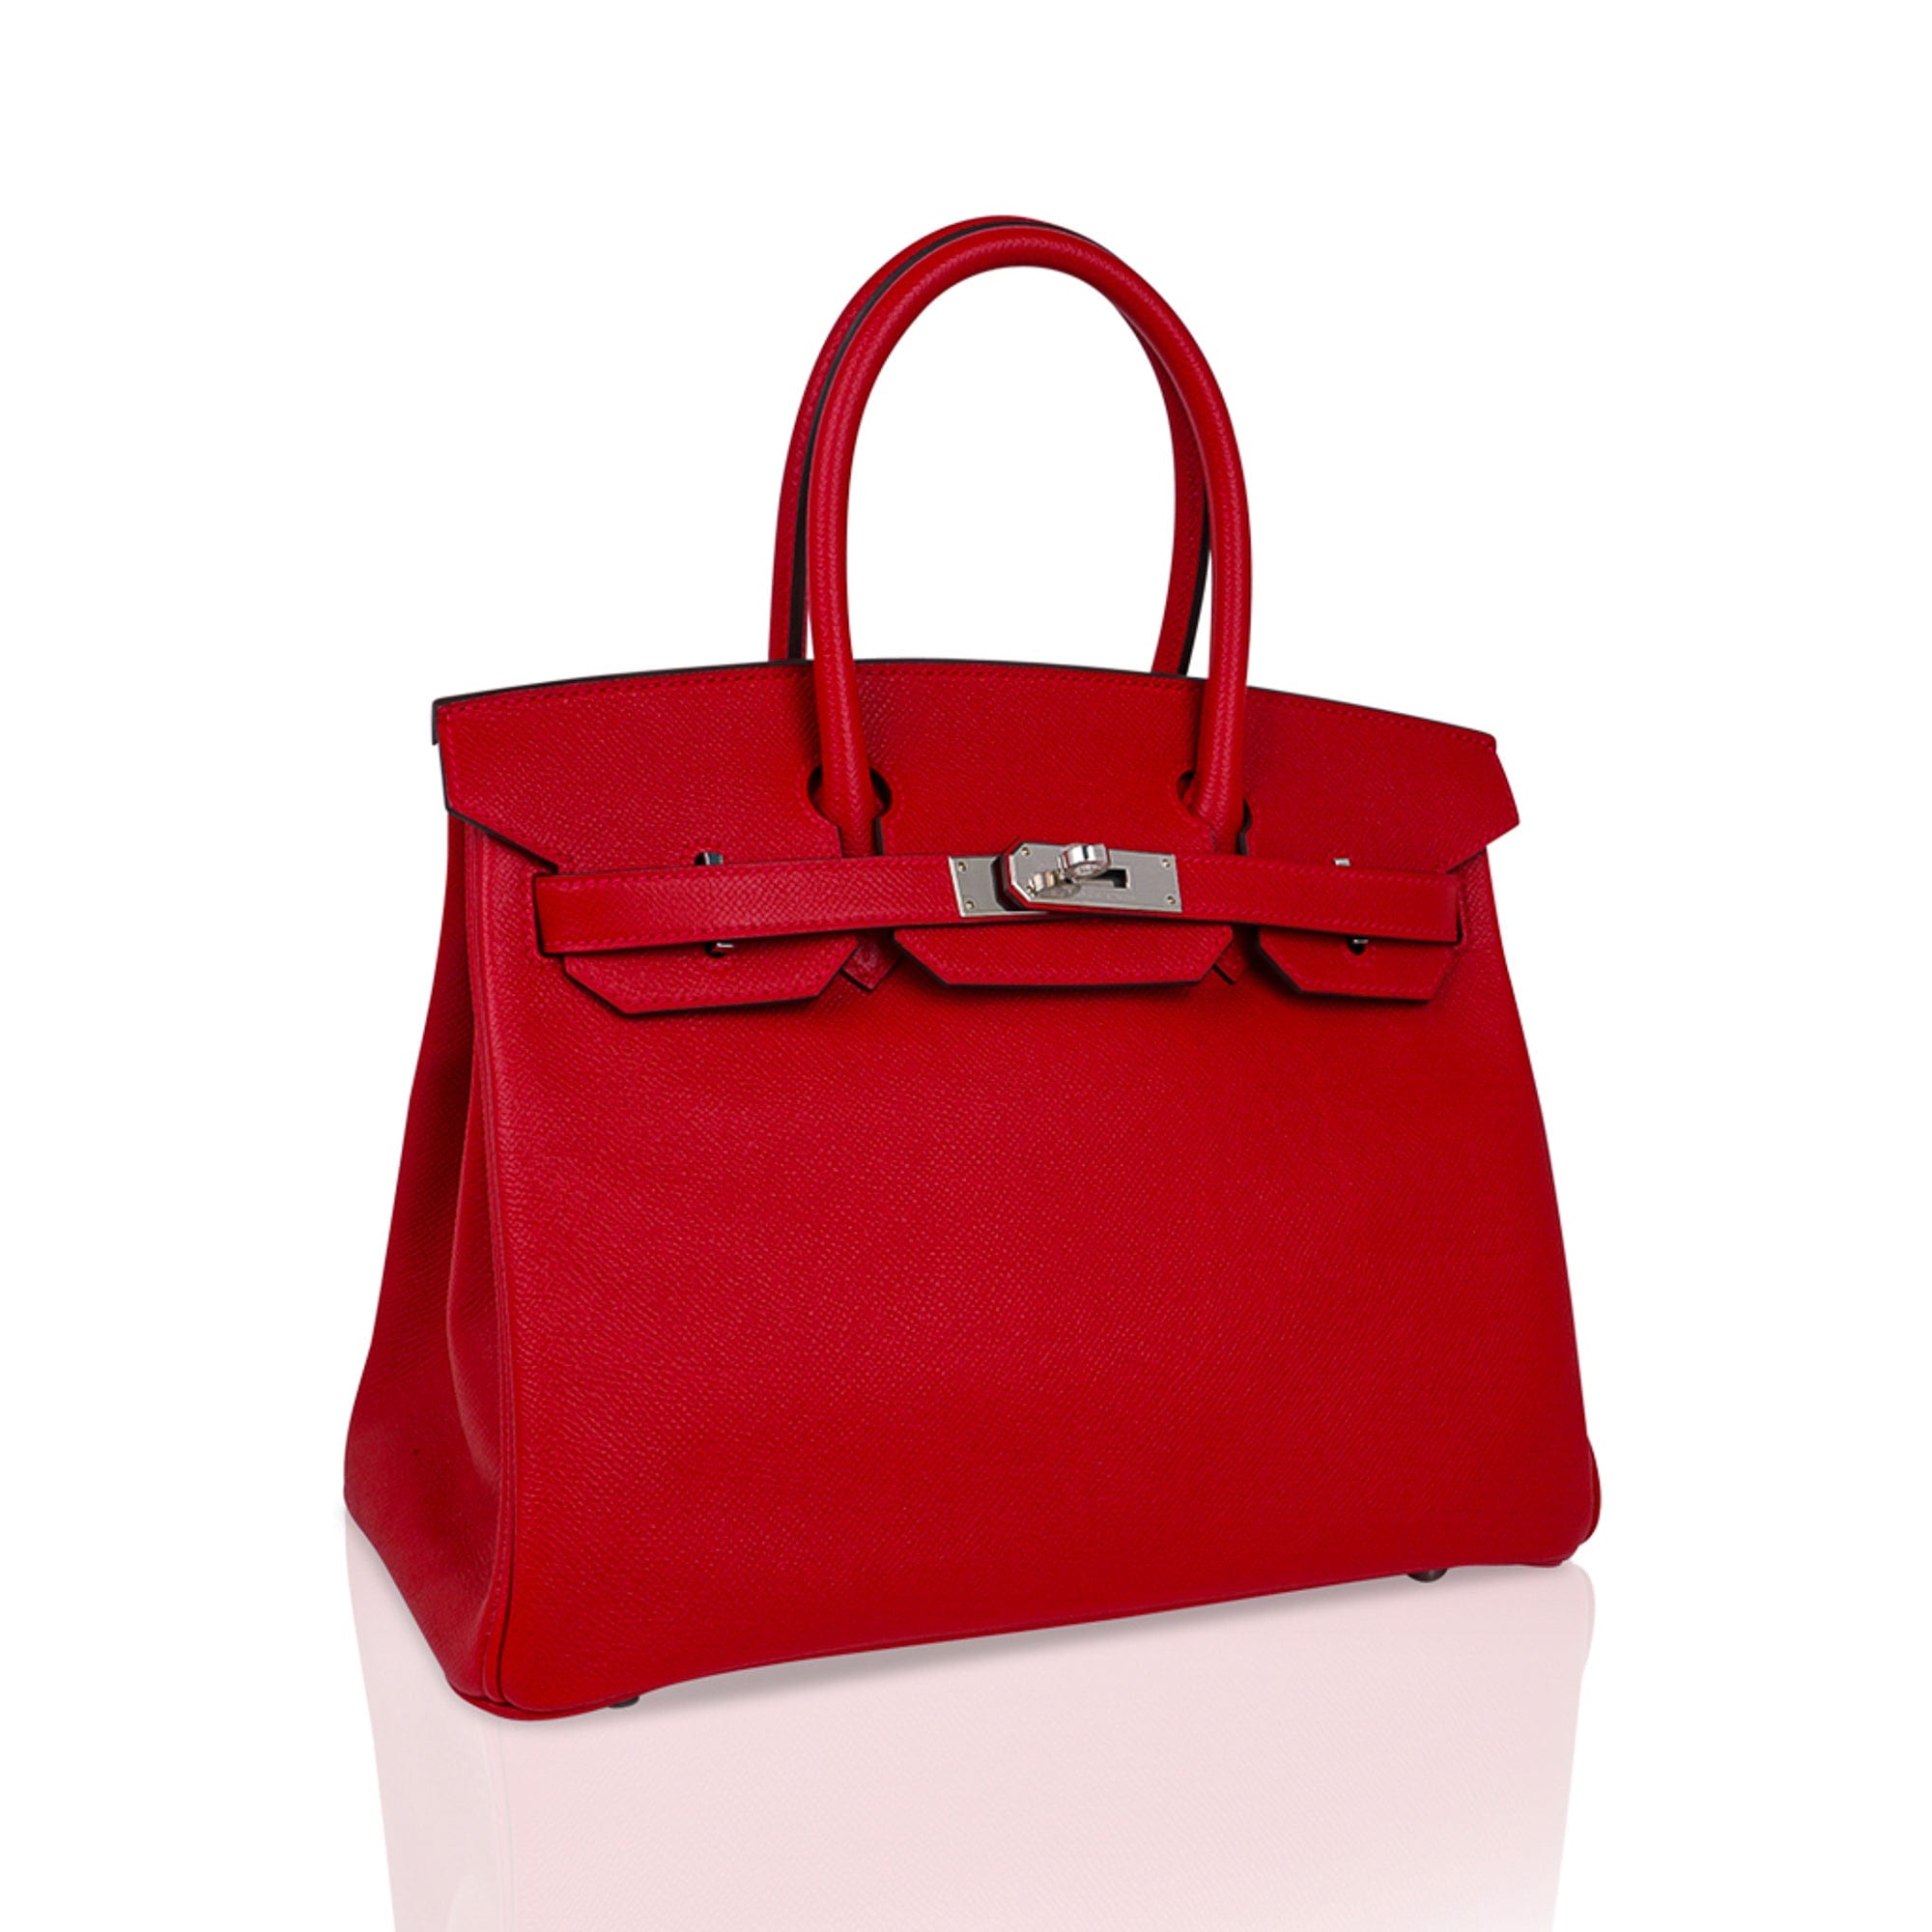 Hermes 30cm Rouge Casaque Togo Leather Birkin Bag with Palladium